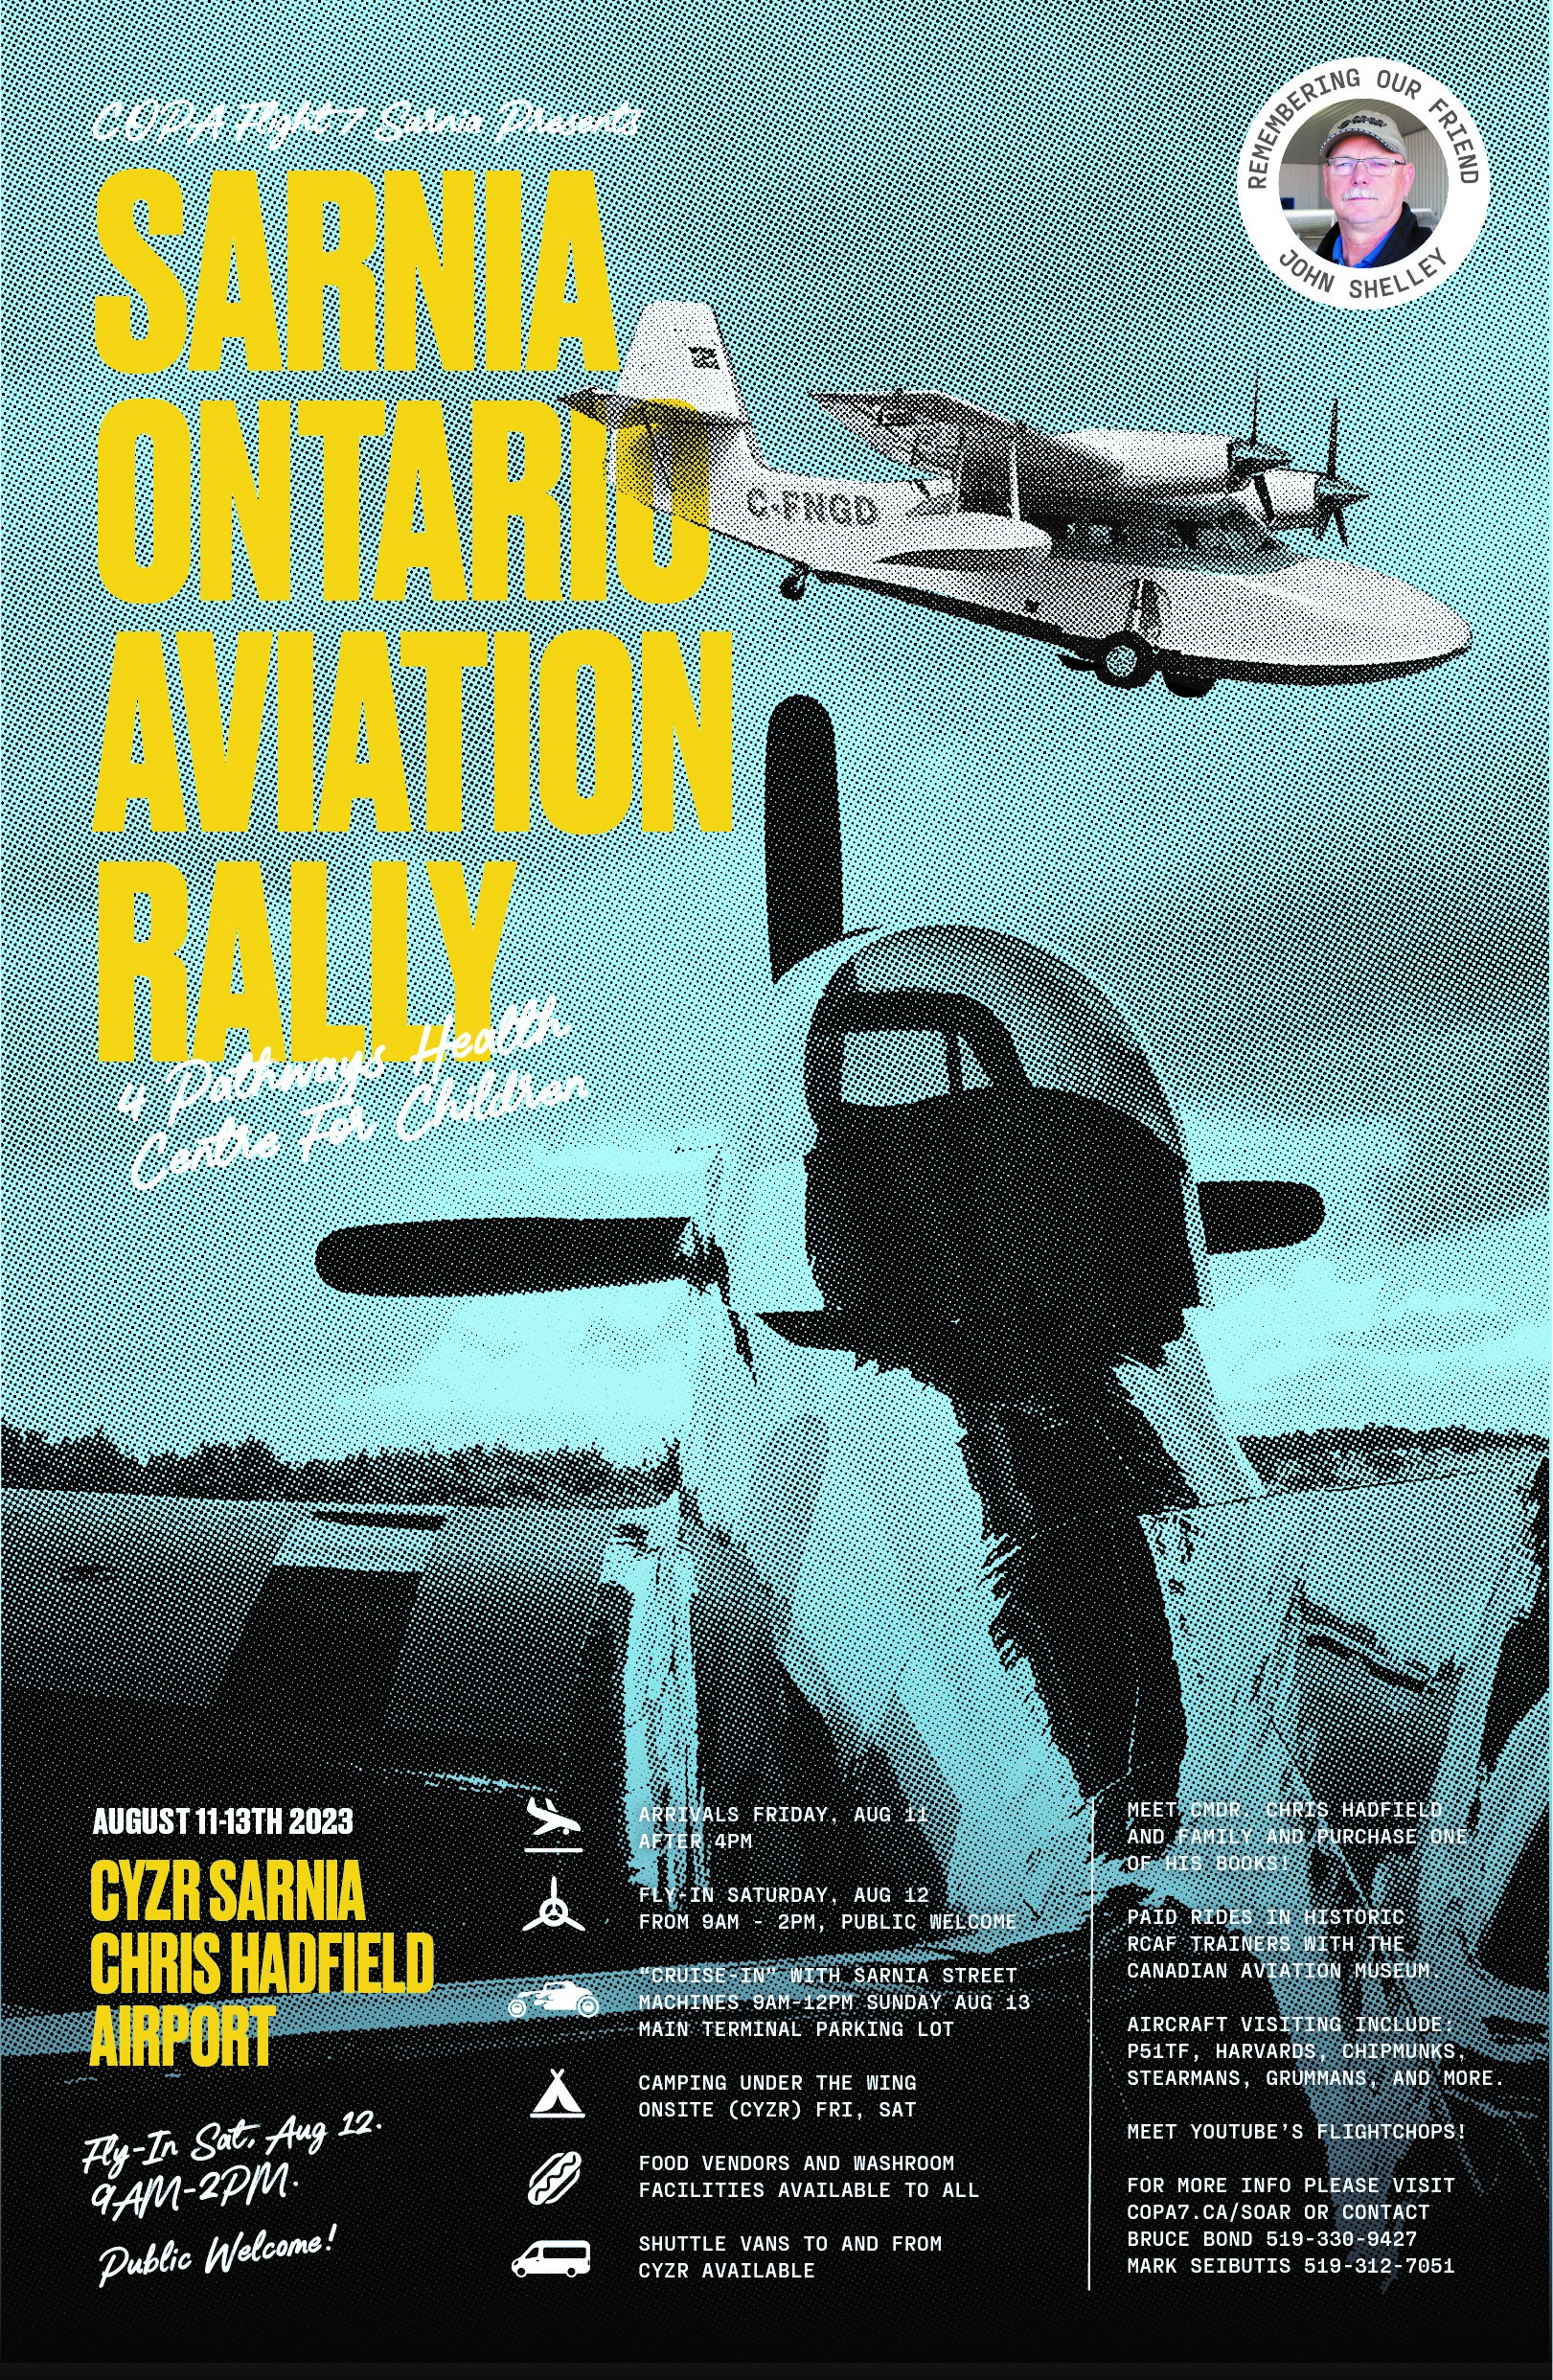 Sarnia Ontario Aviation Rally (S.O.A.R.) For Pathways